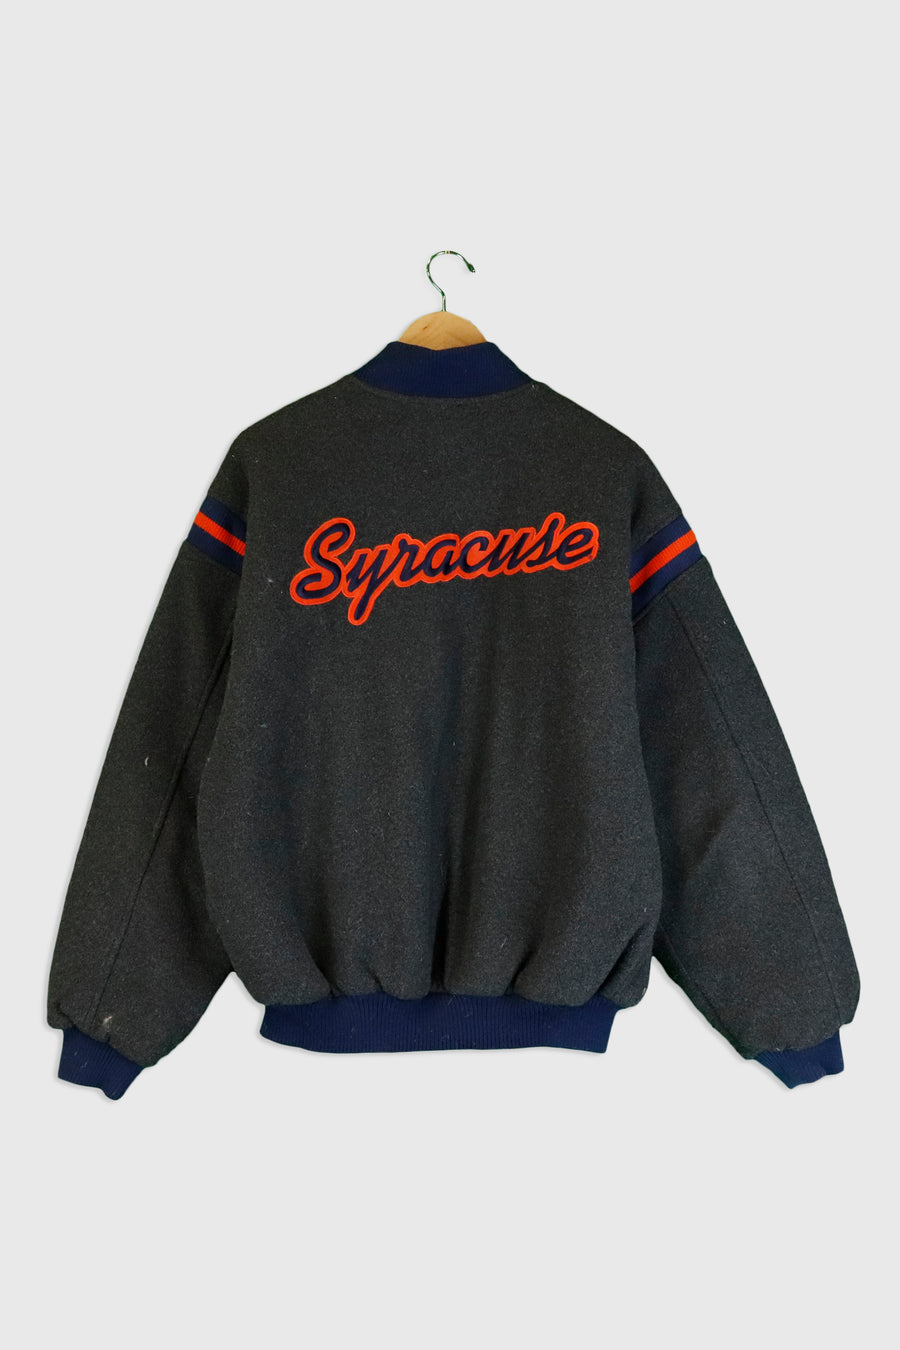 Vintage Nike Syracuse Varsity Bomber Sweatshirt Sz M